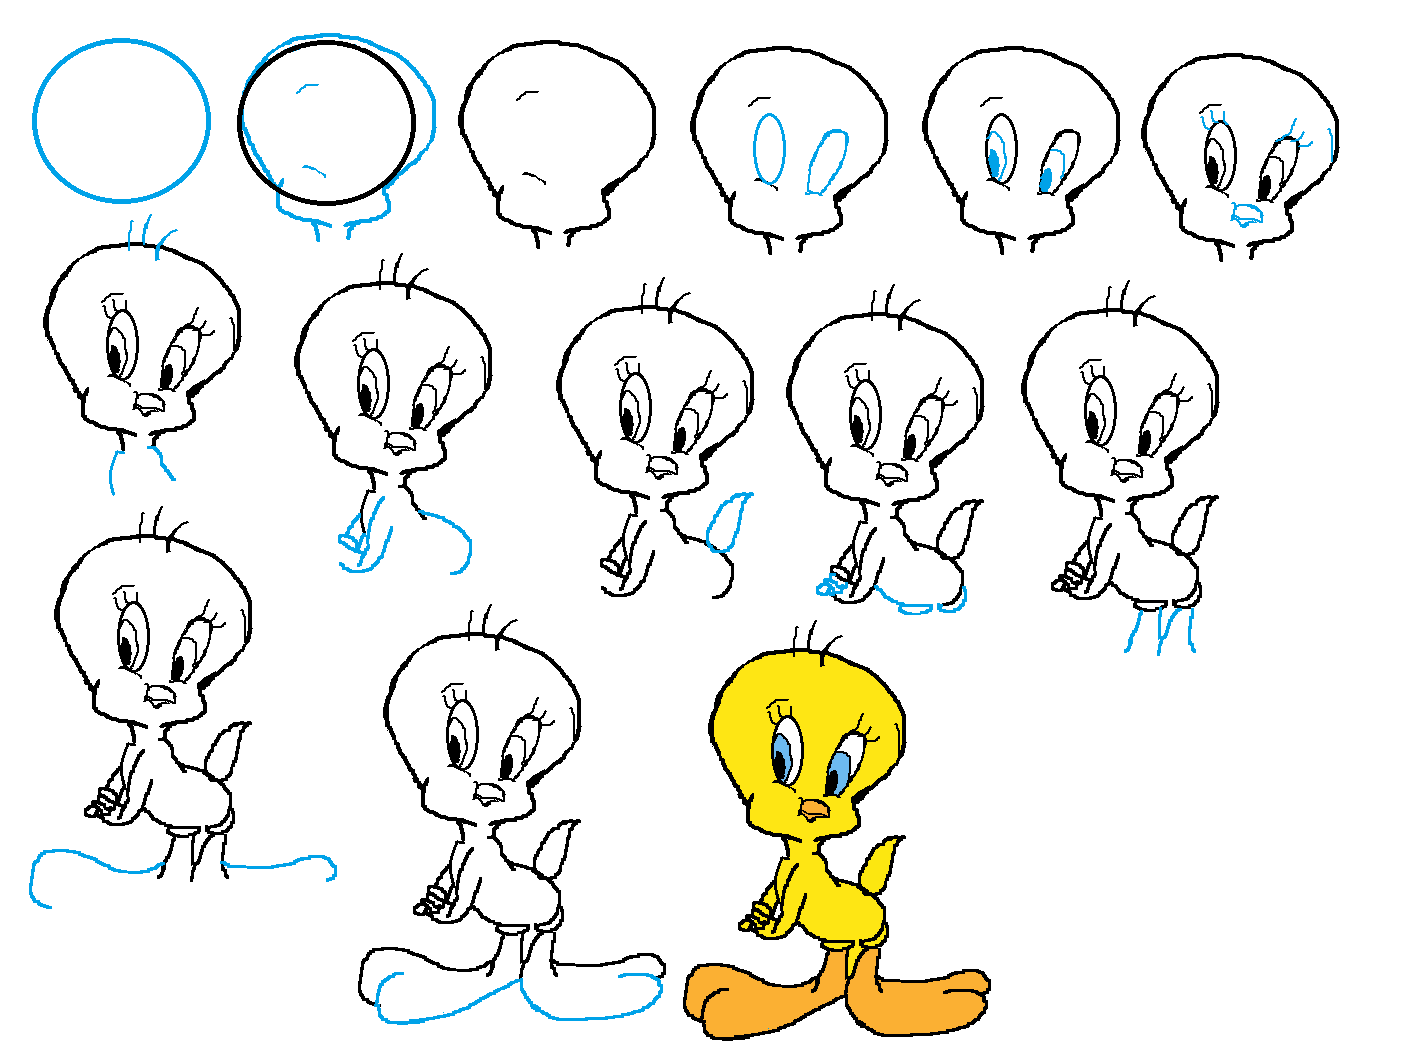 How to draw tweety bird easy step by step